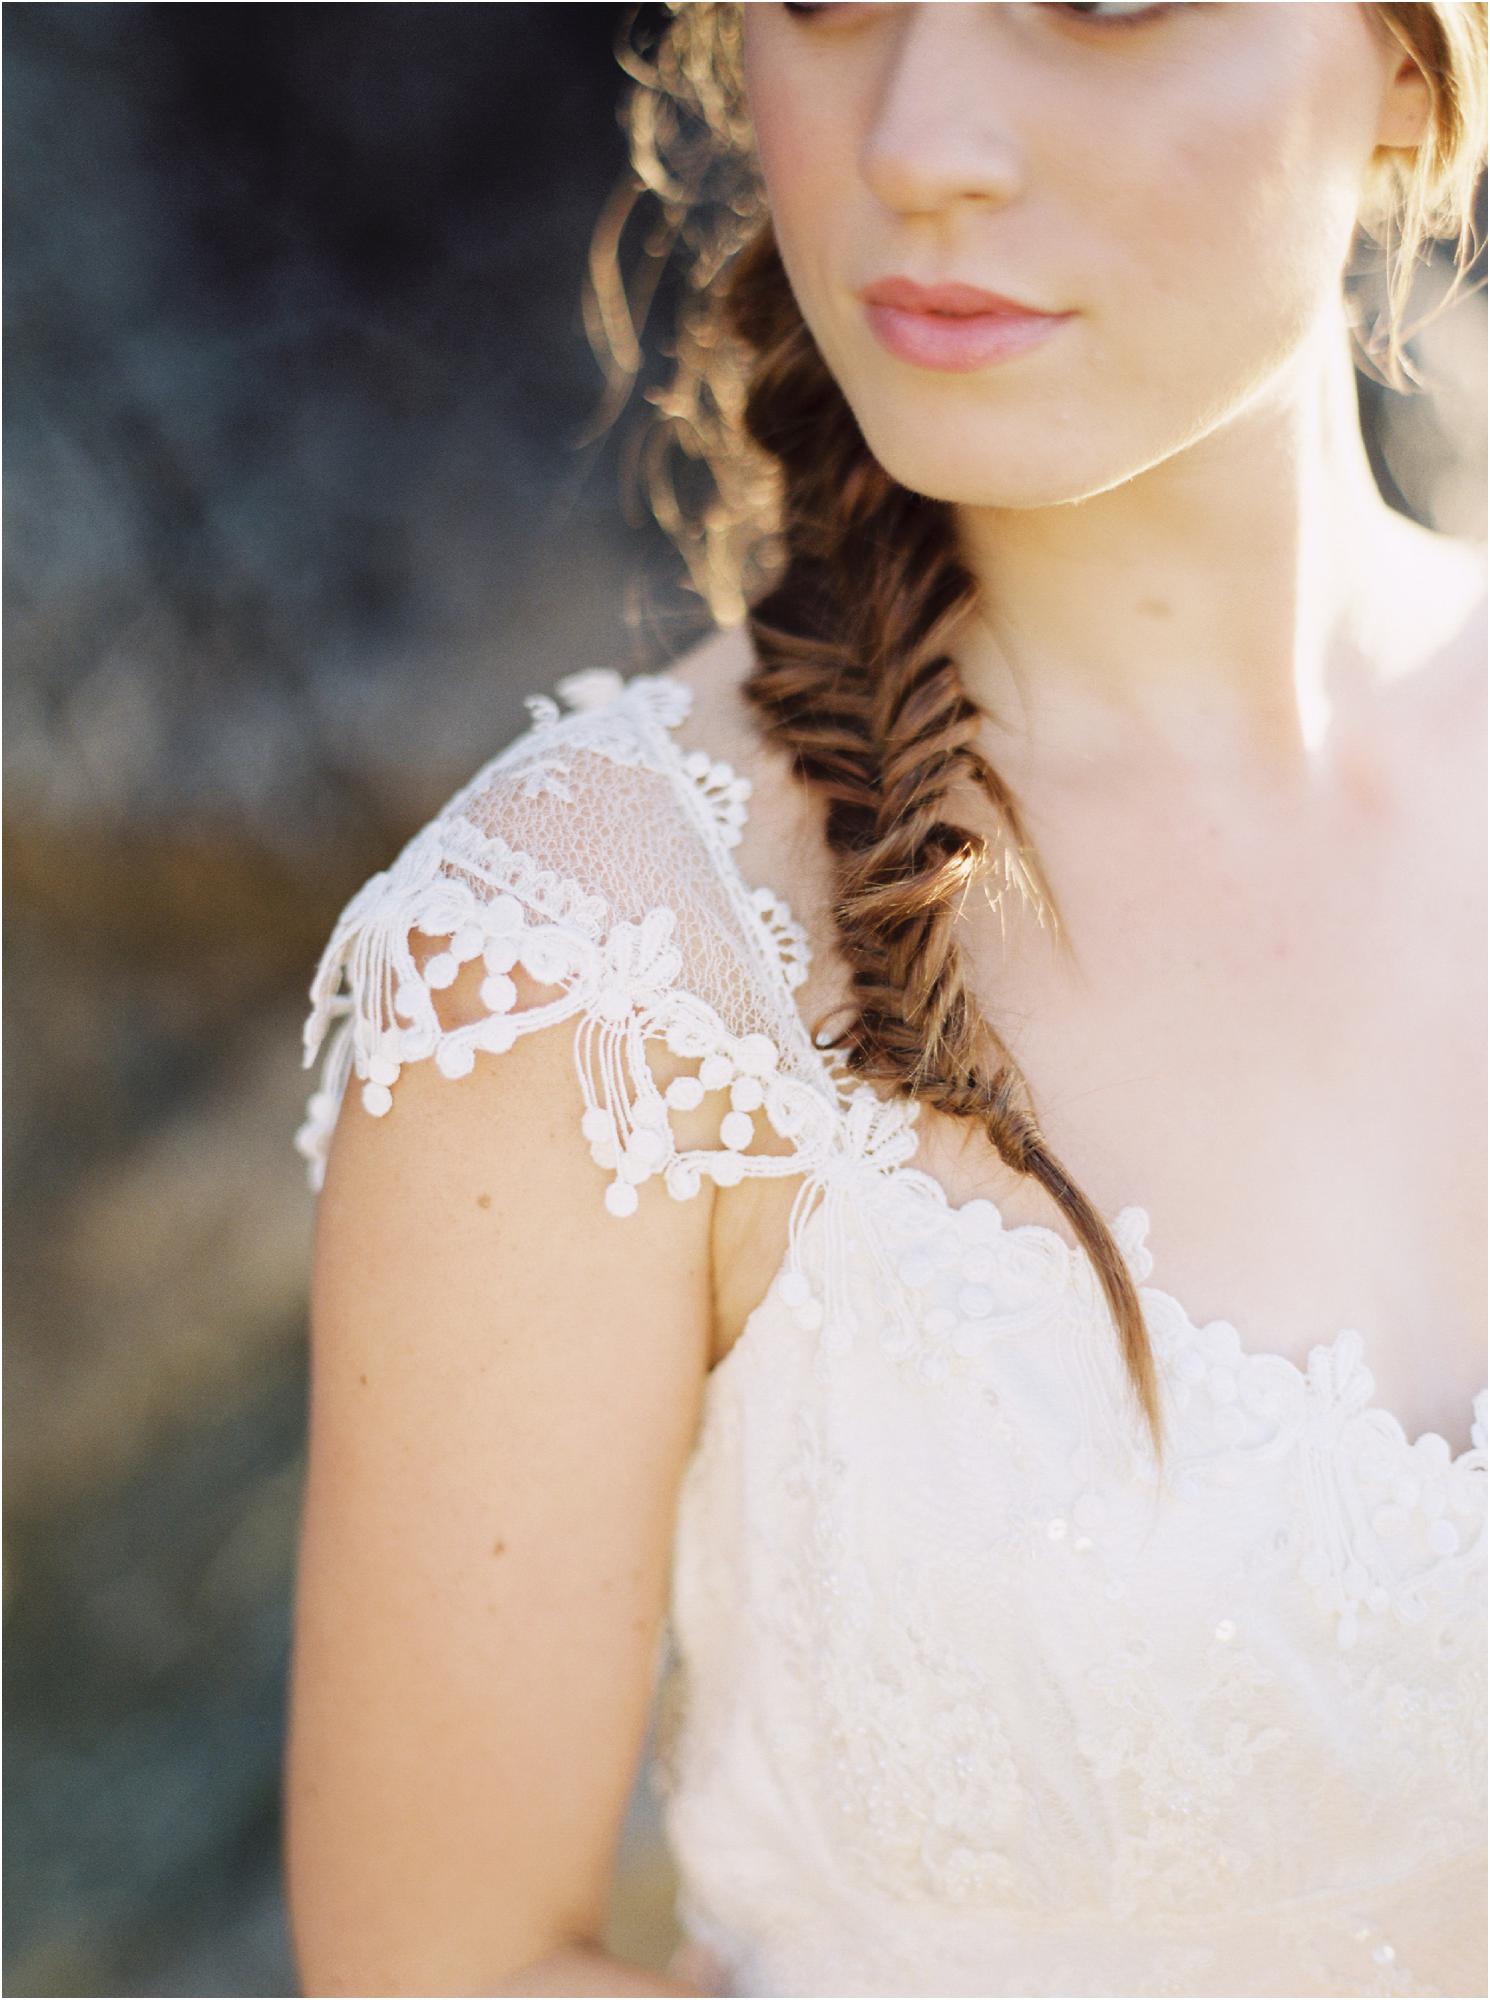 Seaside Bridal Session in Sonoma, California.   Dress: Claire Petibone https://clairepettibone.com/  Design & Florals: Thistle & Honey